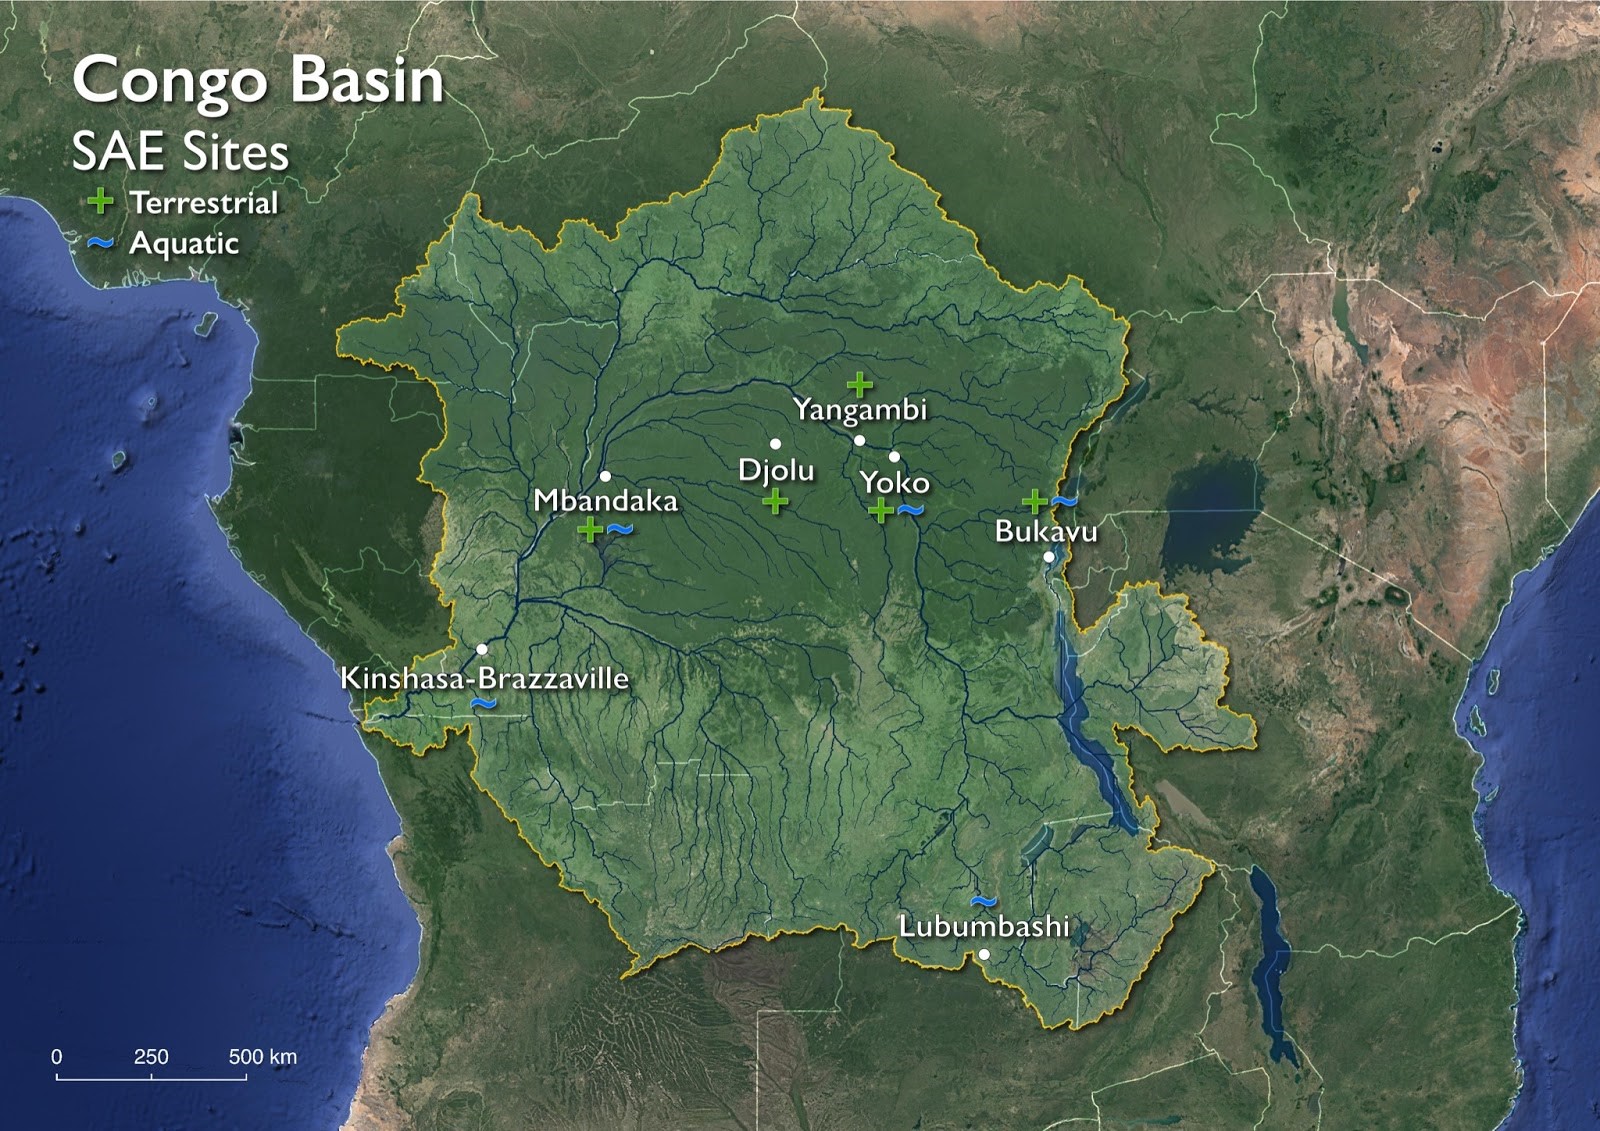 Basemap source: Google Satellite imagery 2020. Map made by Travis Drake.